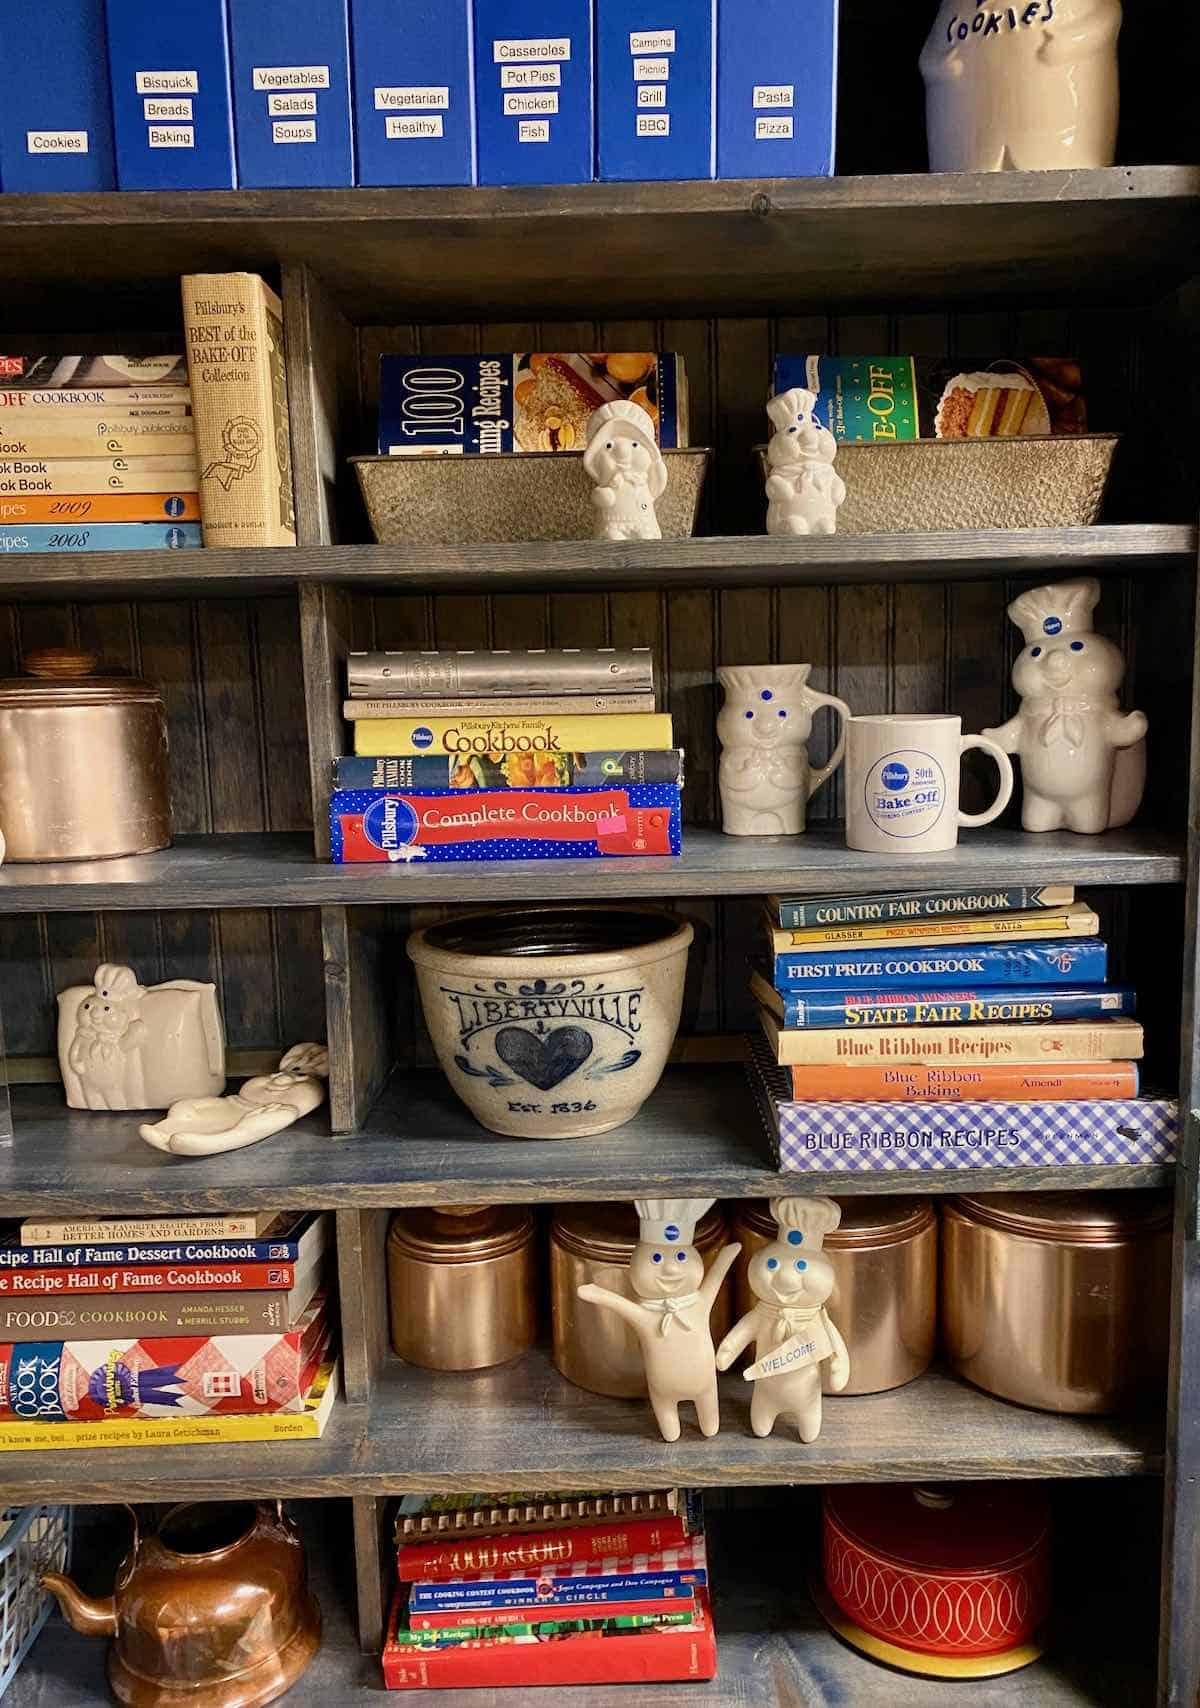 the culinary cellar shelves of Pillsbury bake-off memorabilia